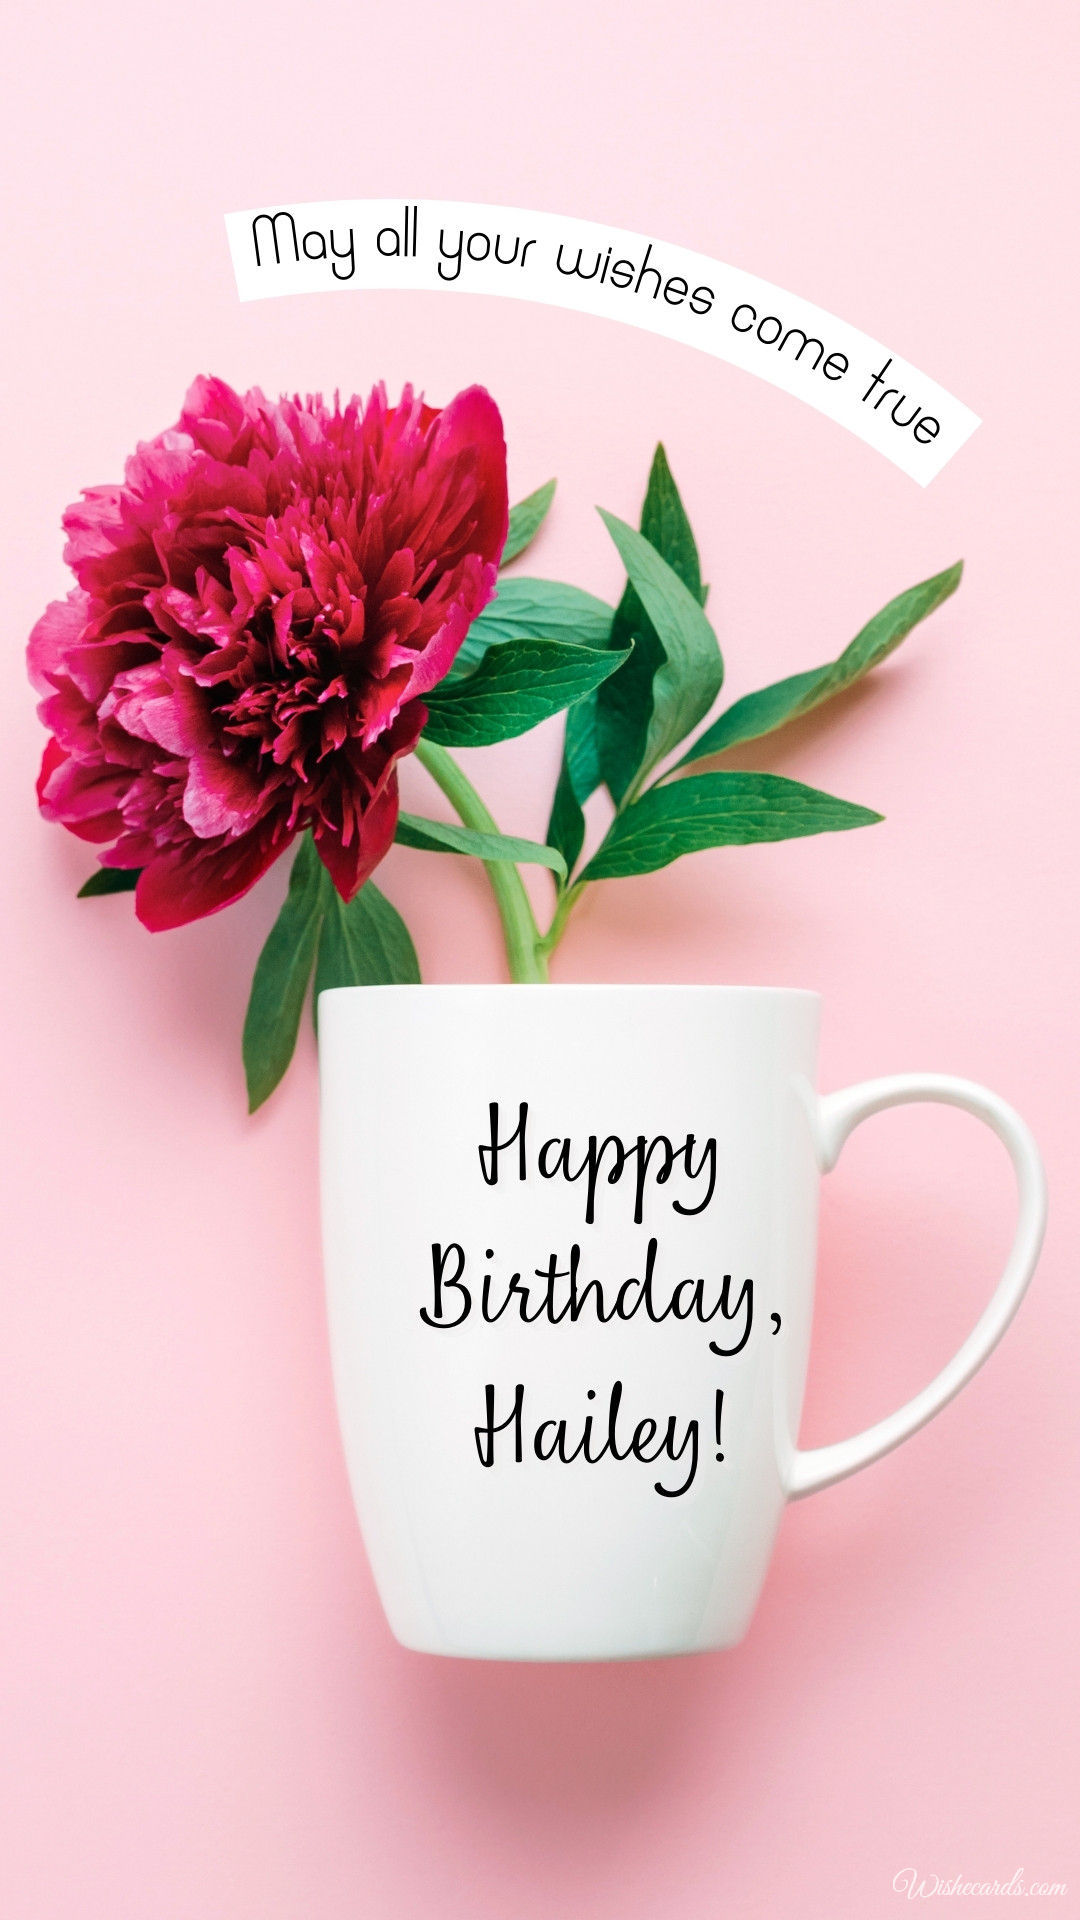 Happy Birthday Hailey Image